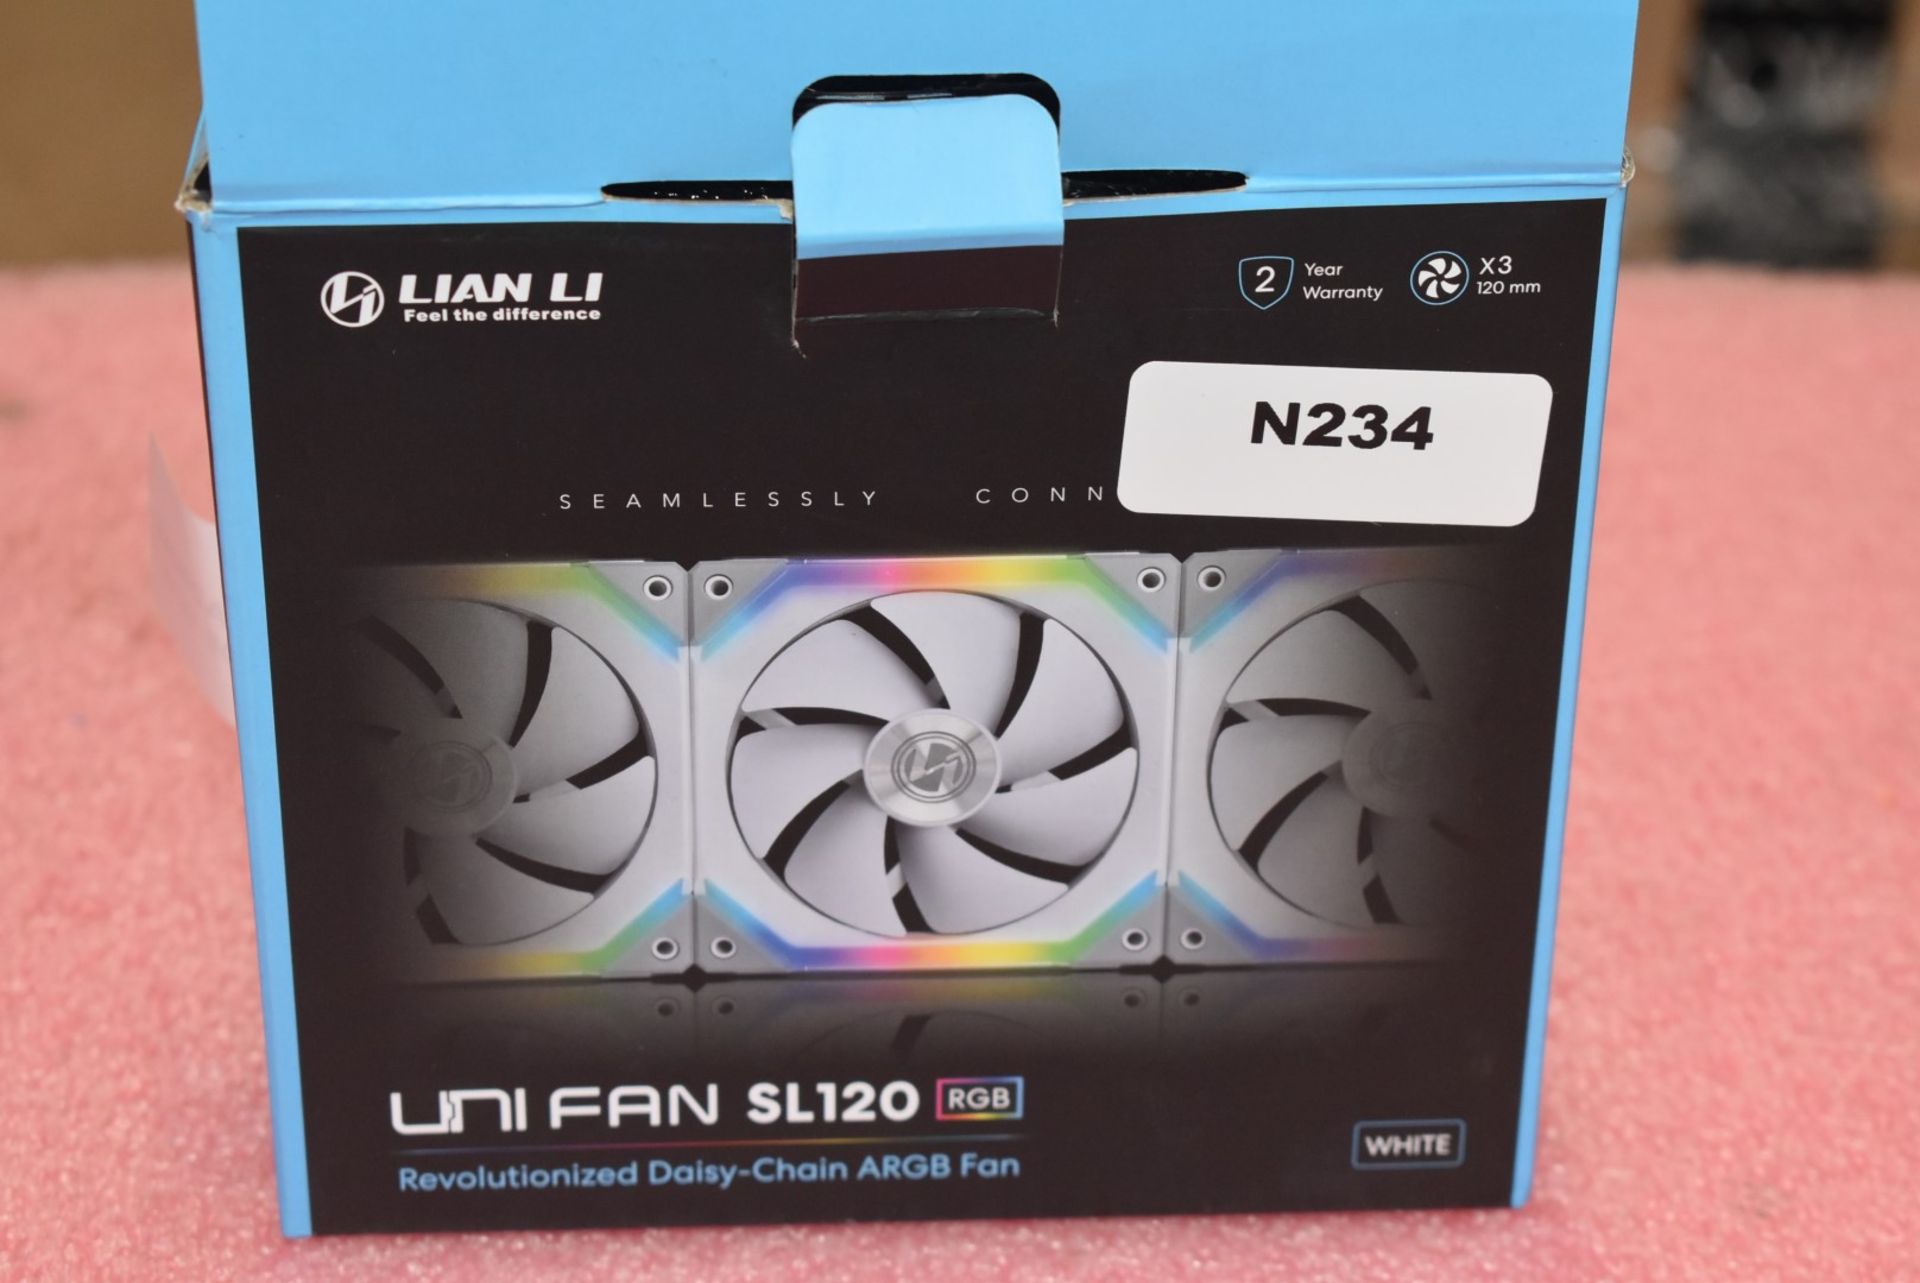 3 x Lian Li Uni Fan SL120 RGB 120mm Fans For PC Cases - Unused Boxed Stock - Image 4 of 6